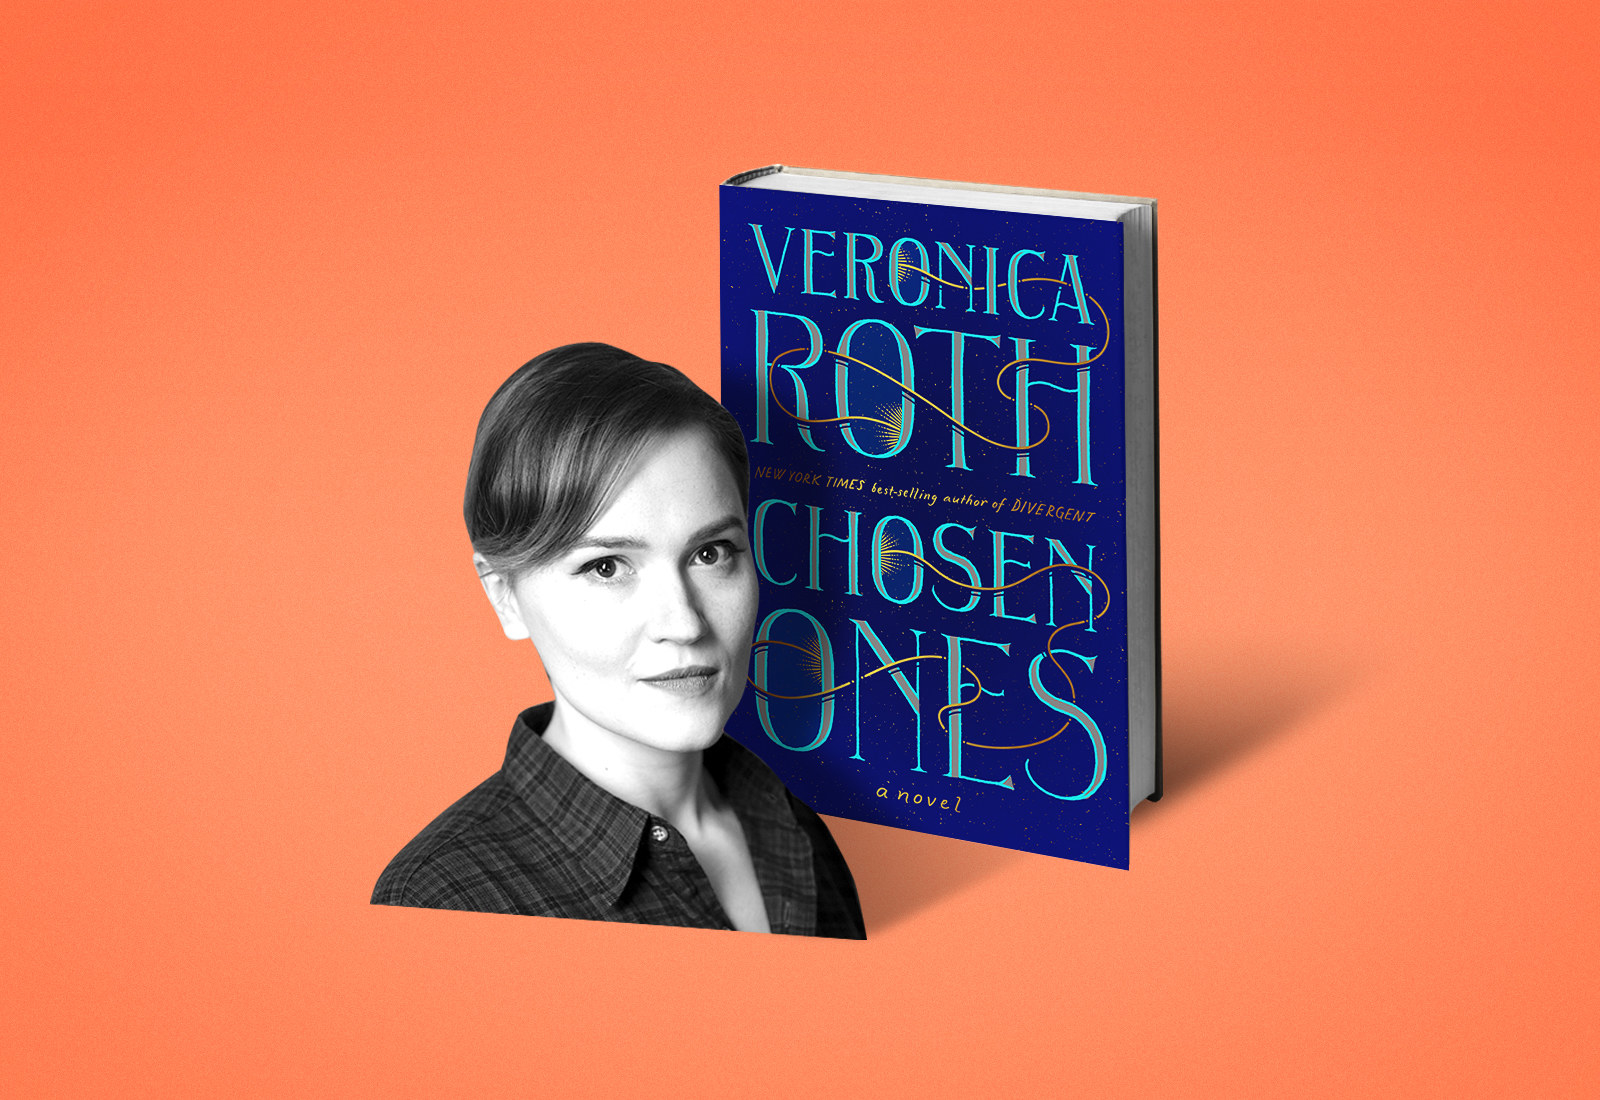 CHOSEN ONES by Veronica Roth – News & Community